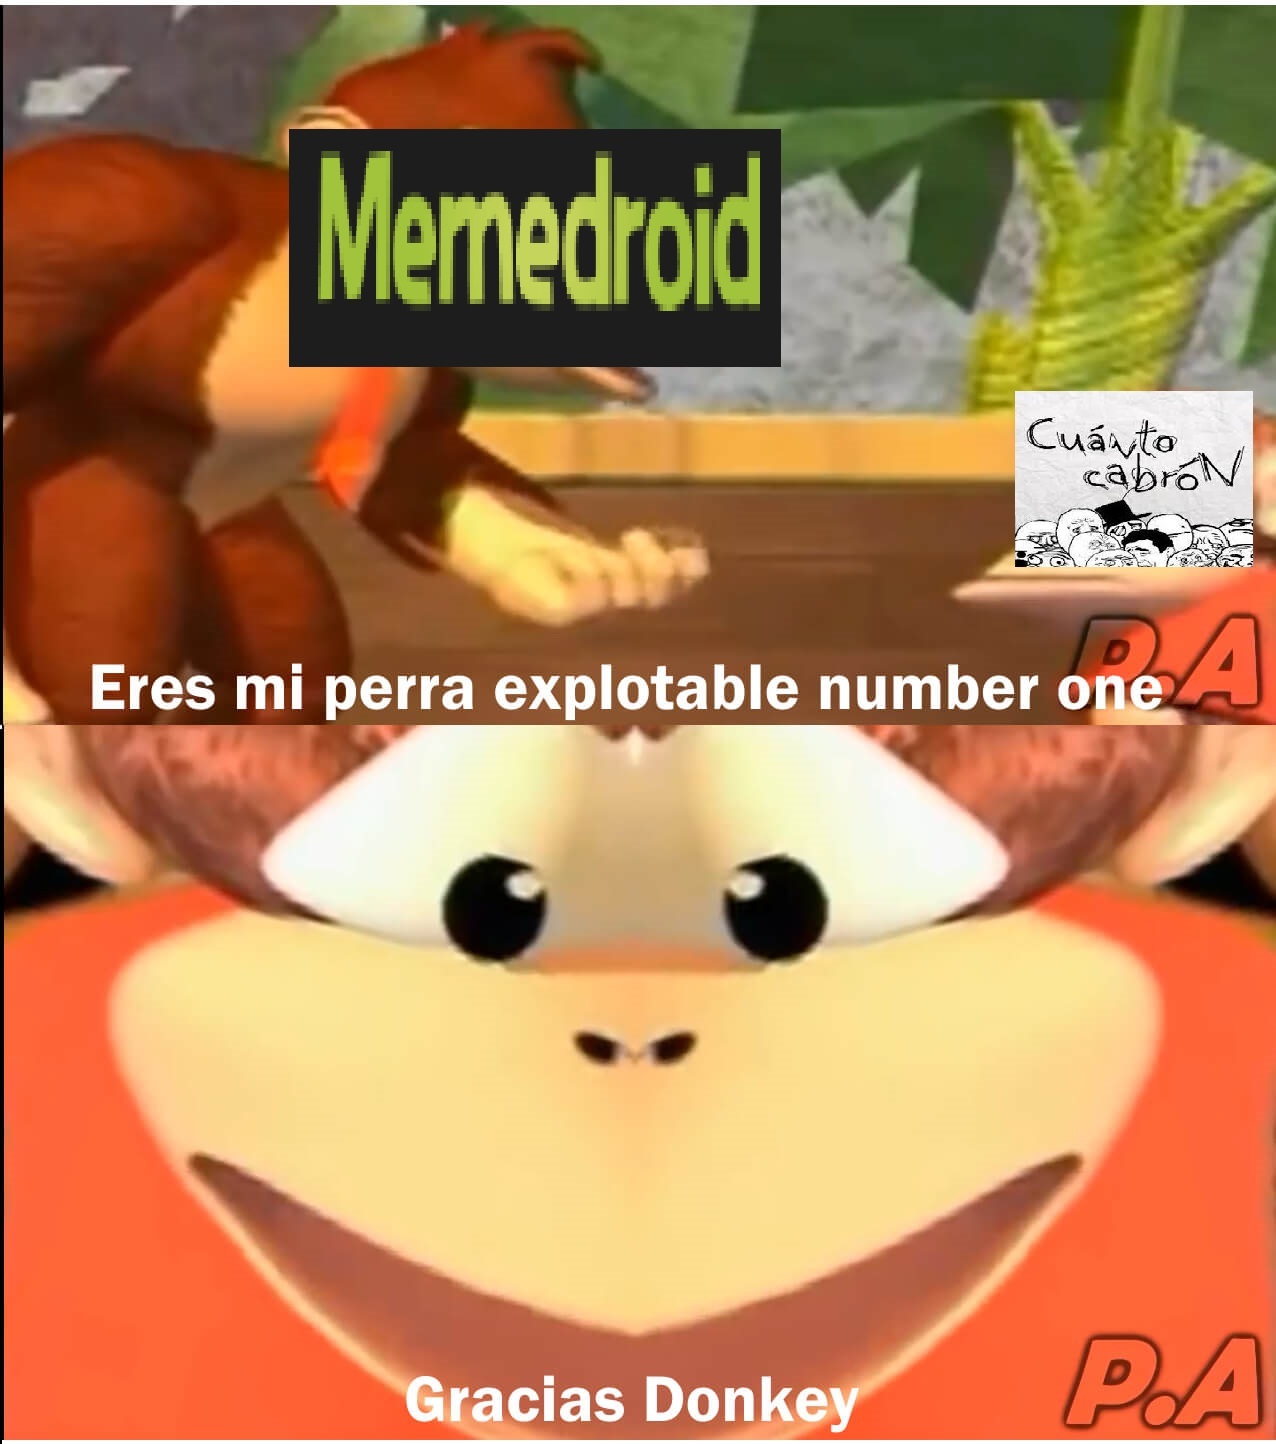 memedroids robando memes de cuanto cabron be like: